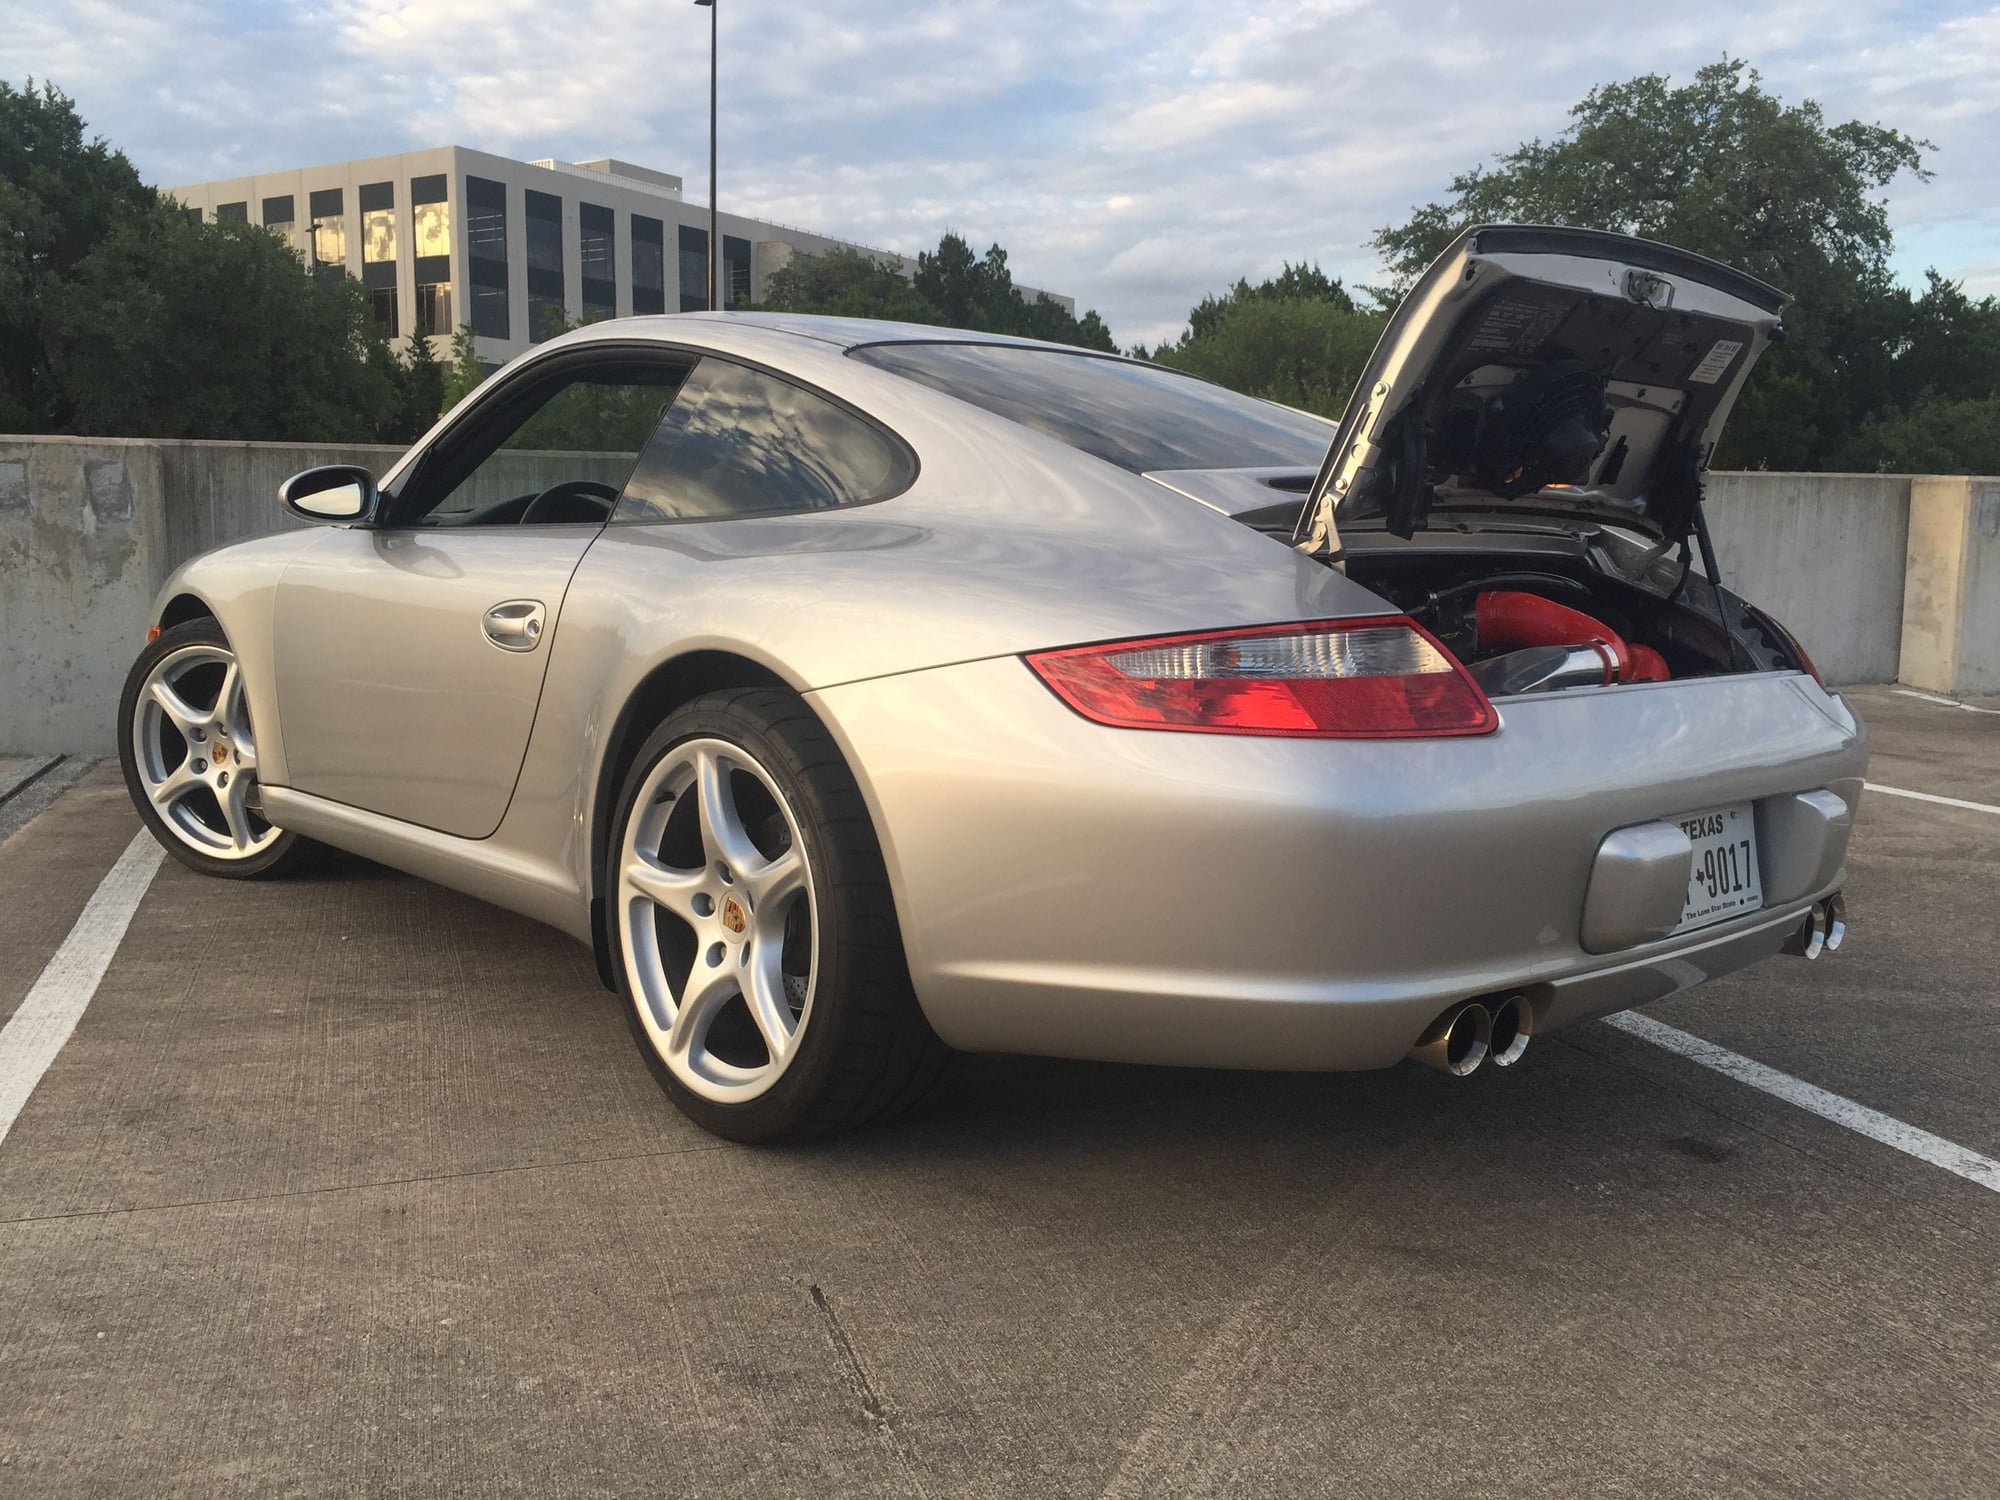 997.1 3.6 TPC Turbo Kit Review - 6SpeedOnline - Porsche Forum and Luxury  Car Resource